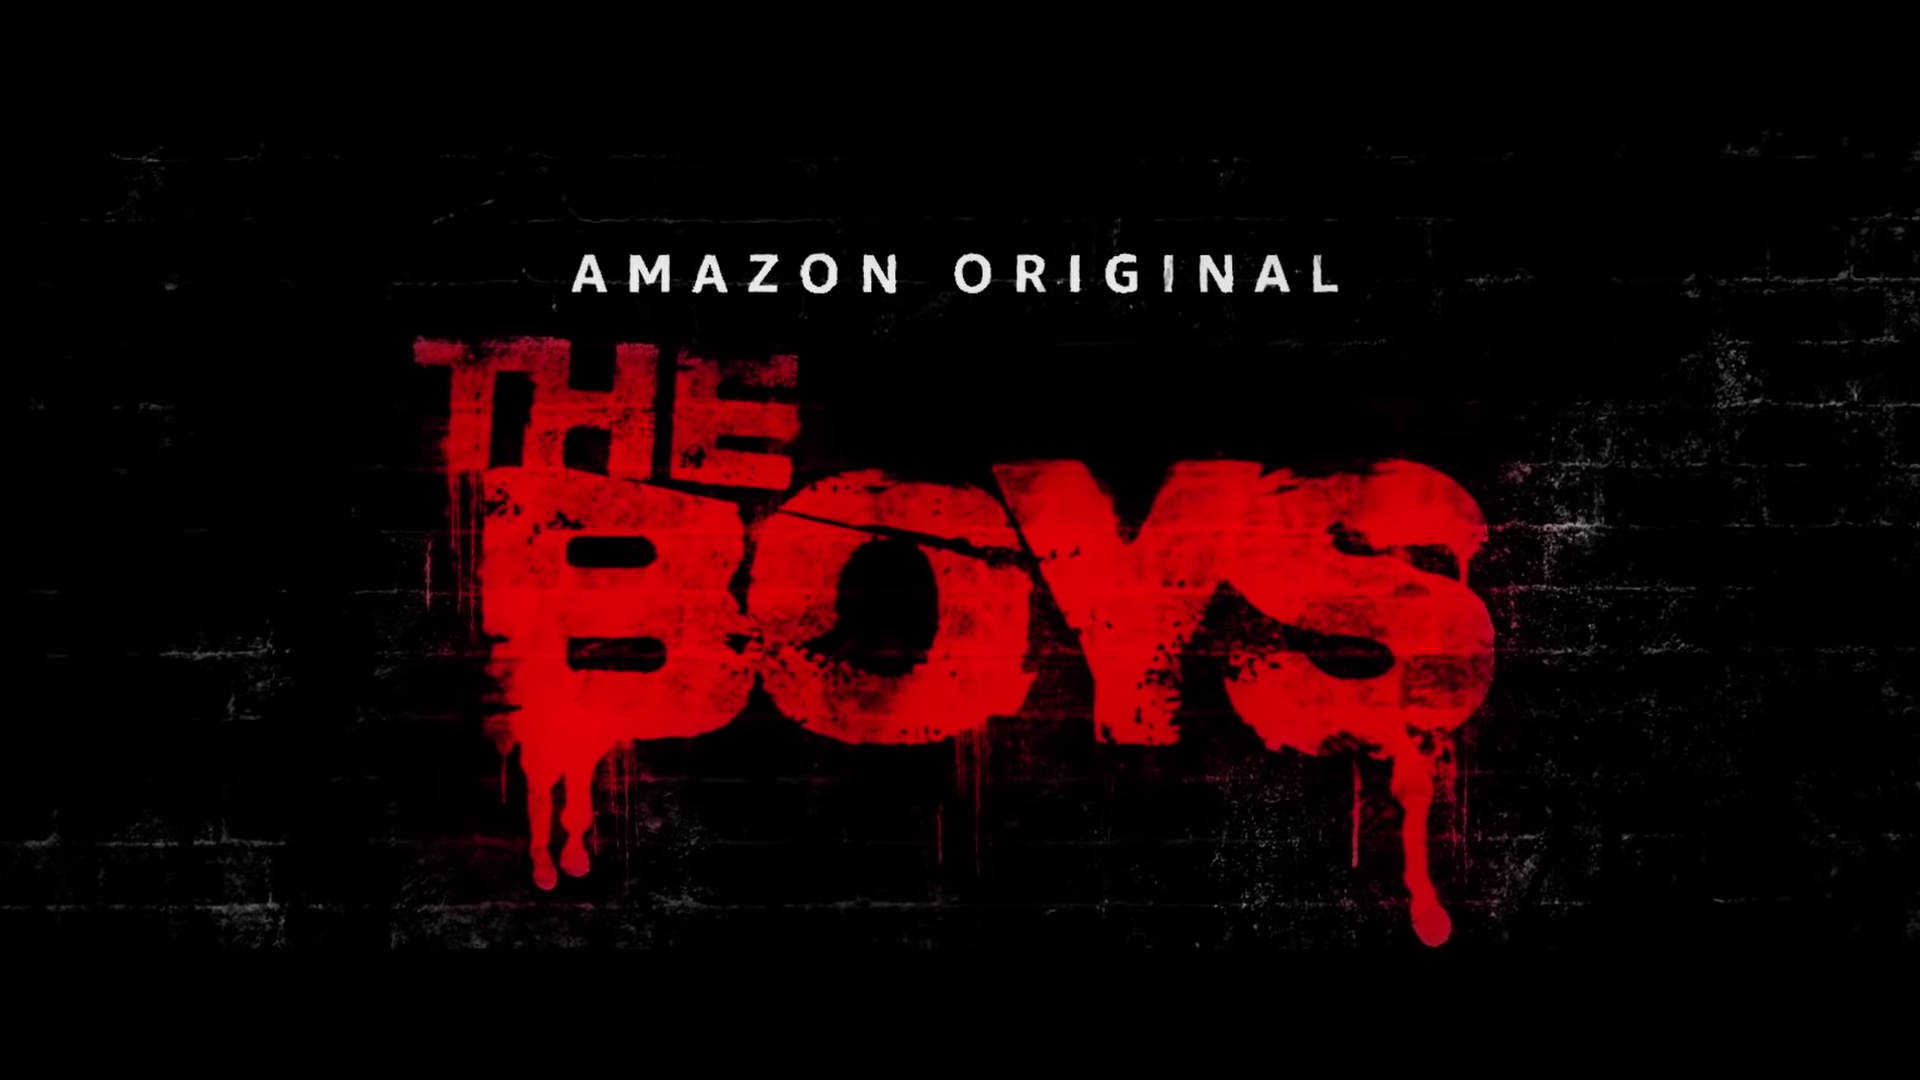 Intense Stare of the Boys from Amazon Original Series Wallpaper